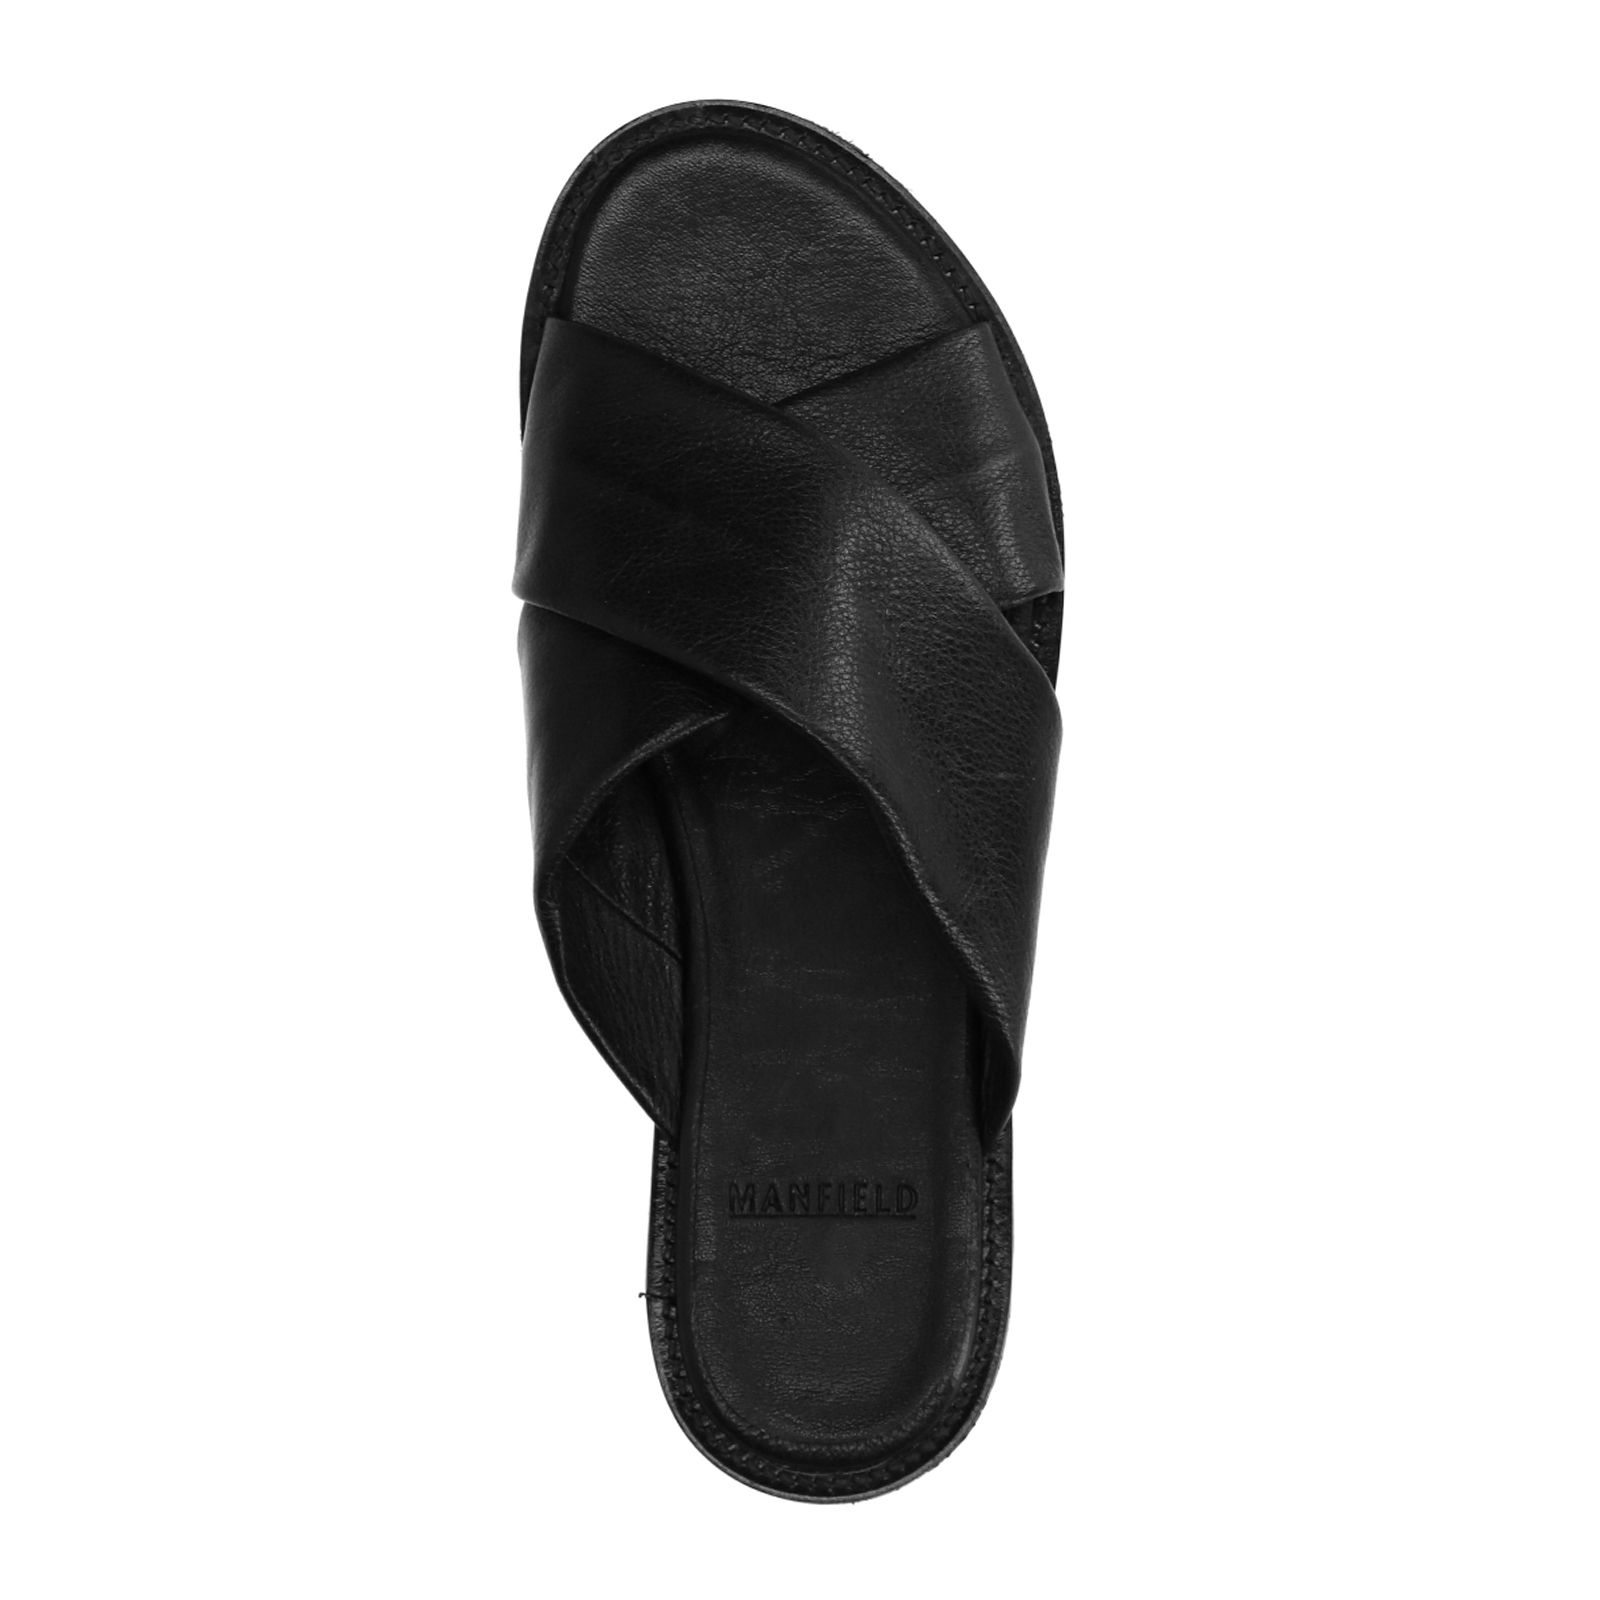 Modderig pakket bod Zwarte leren slippers met gekruisde banden - Dames | MANFIELD